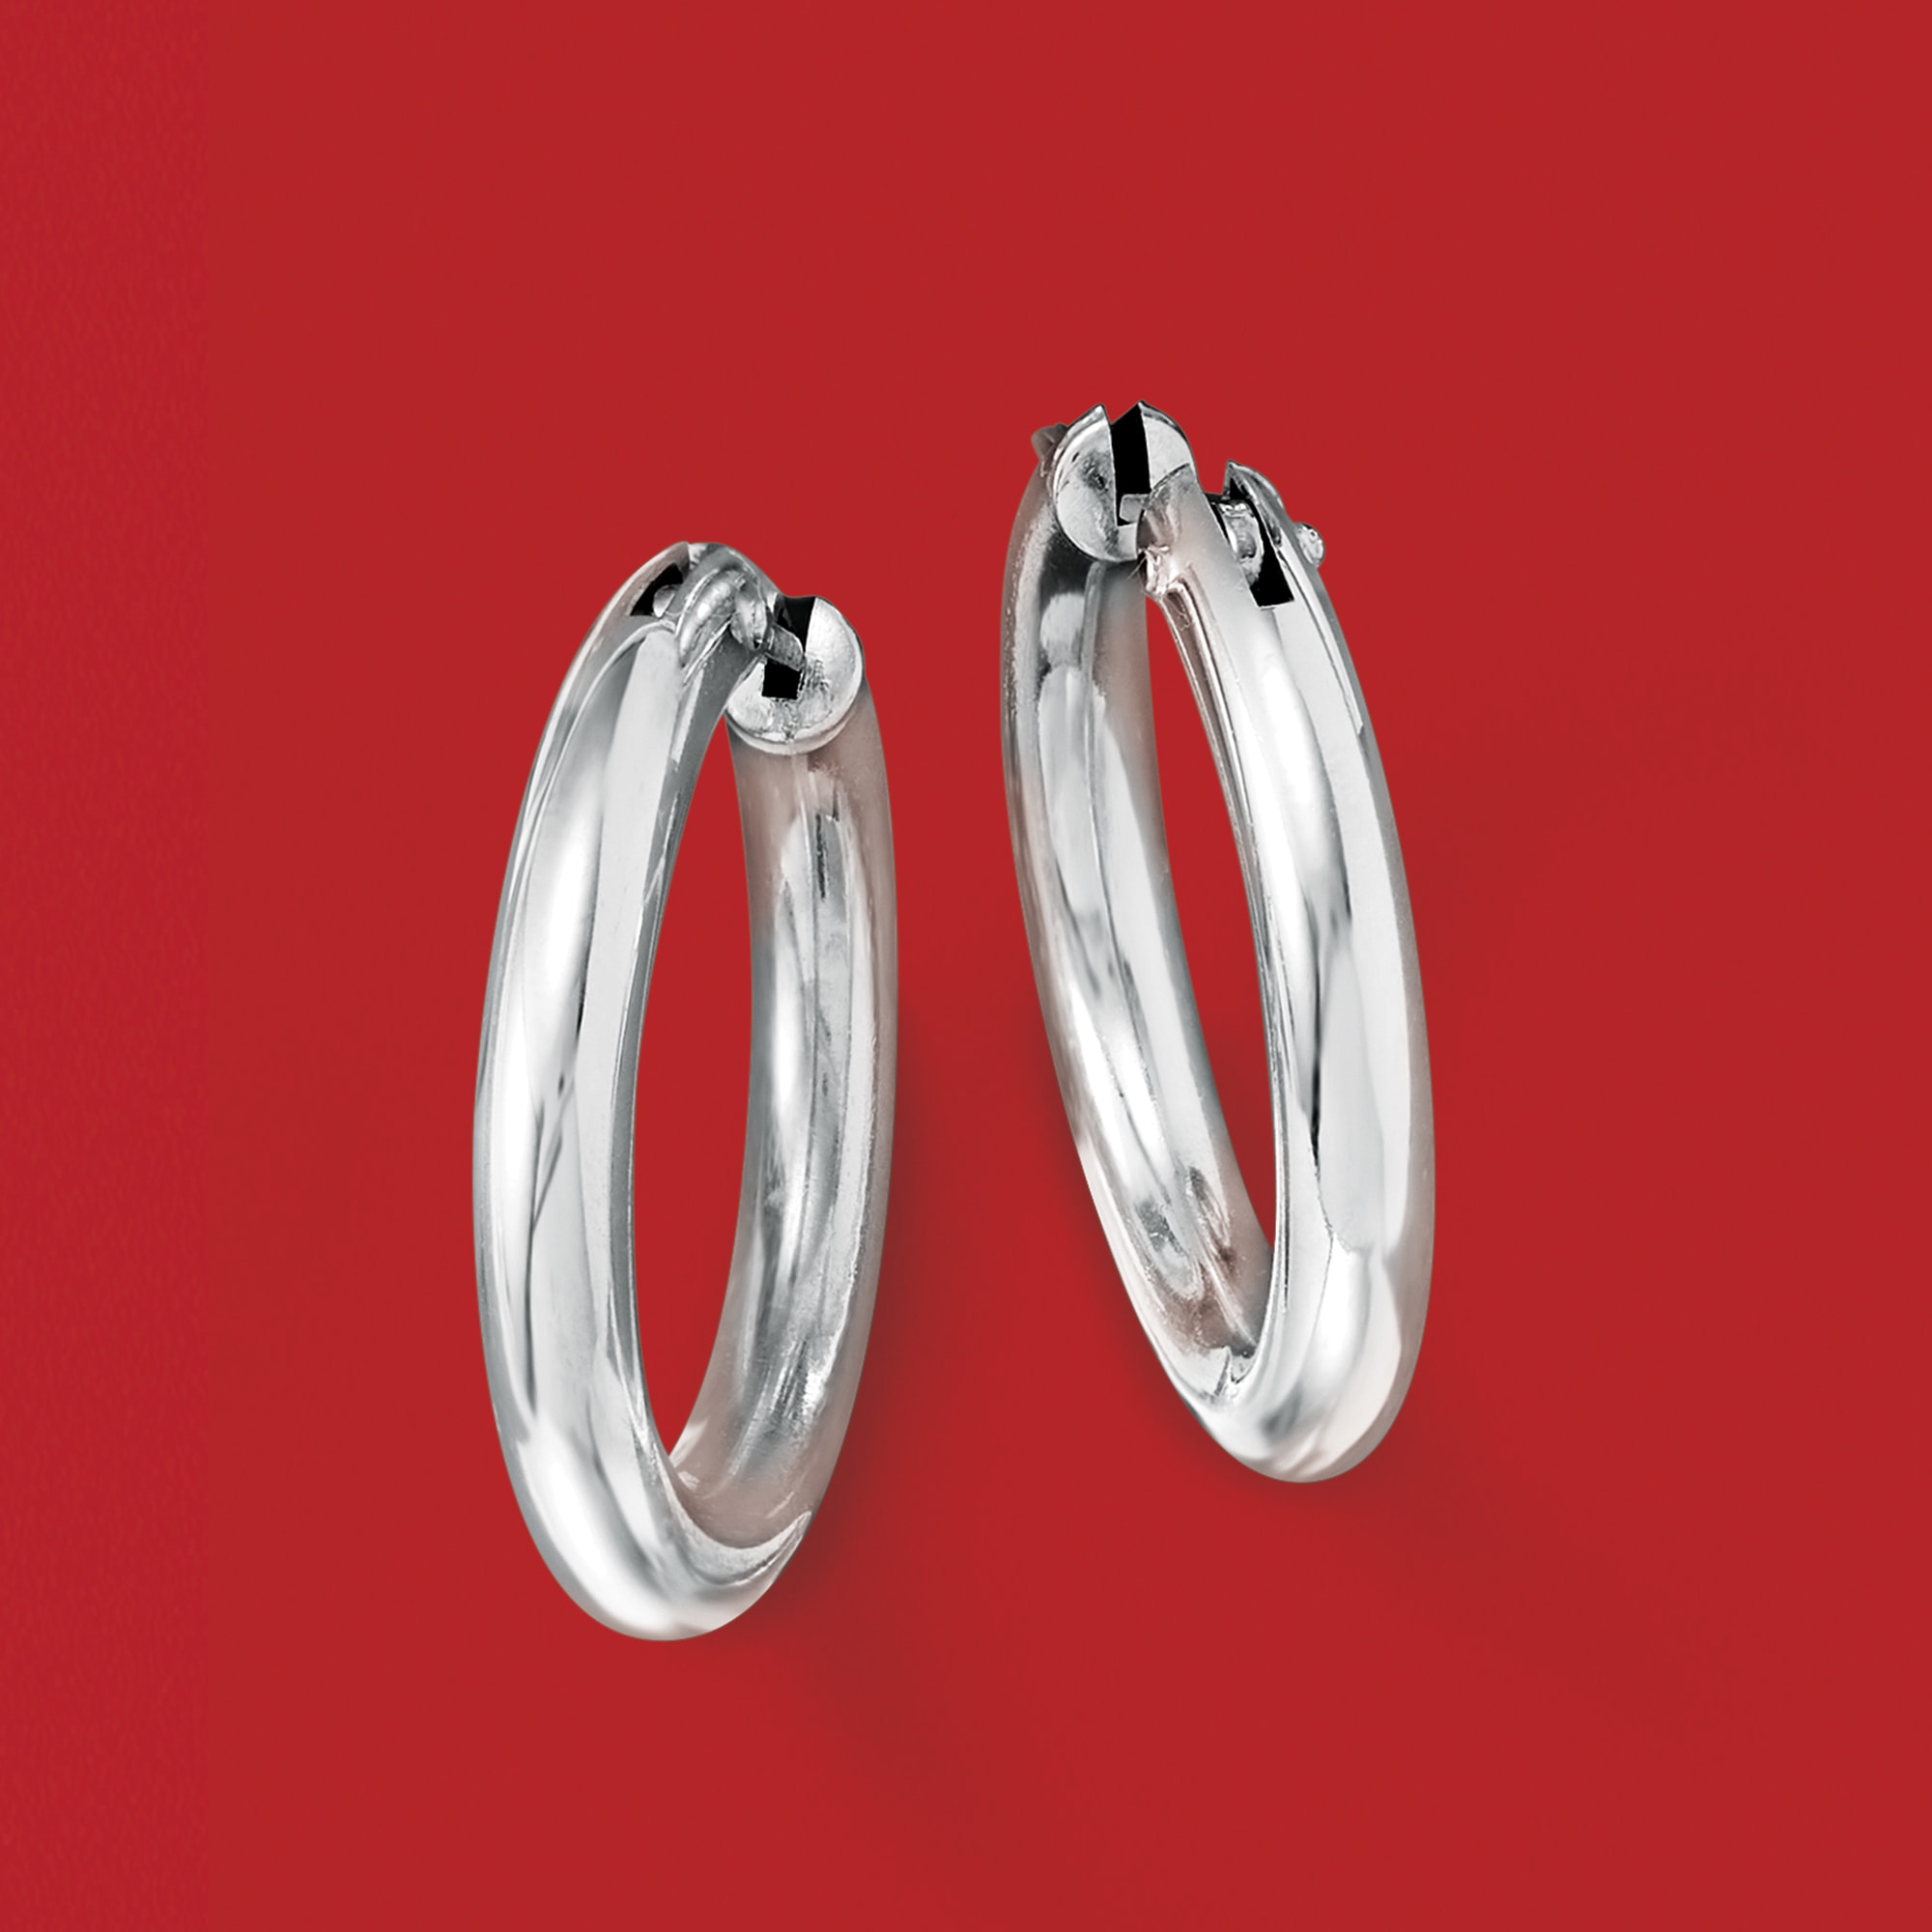 Italian 3mm Sterling Silver Hoop Earrings. 1 1/8